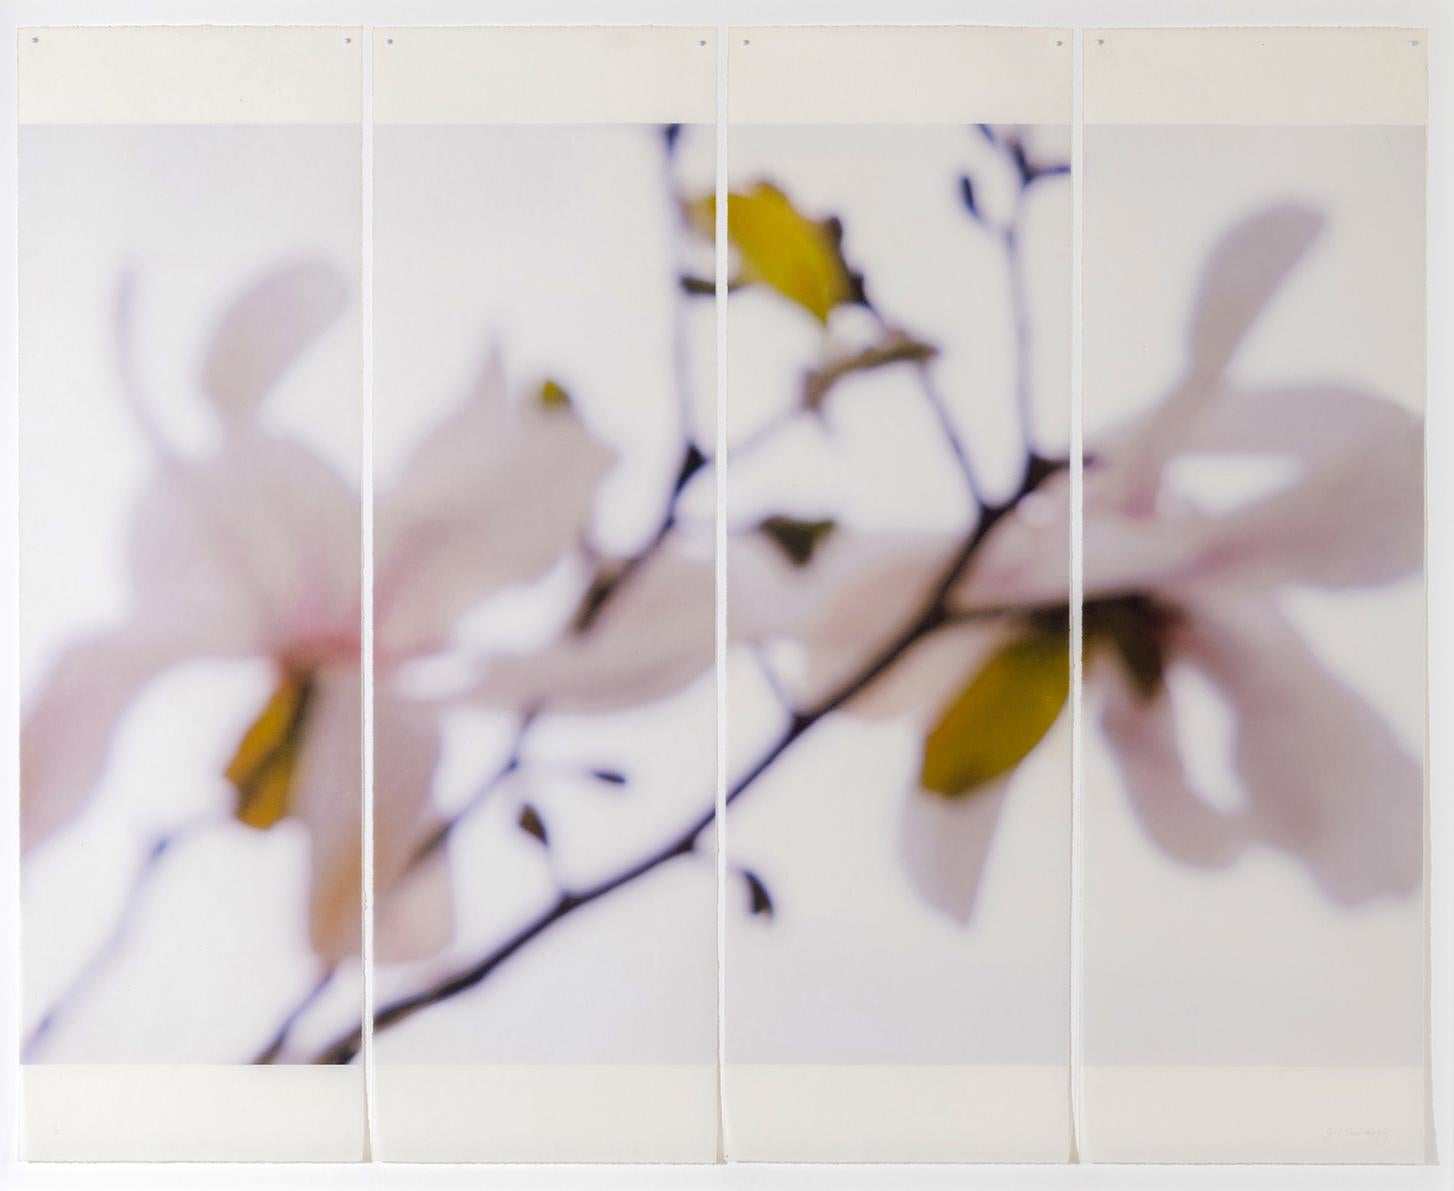 Jeri Eisenberg Still-Life Photograph - Star Magnolia (Delicate Floral Photograph on Japanese Rice Paper, Framed)